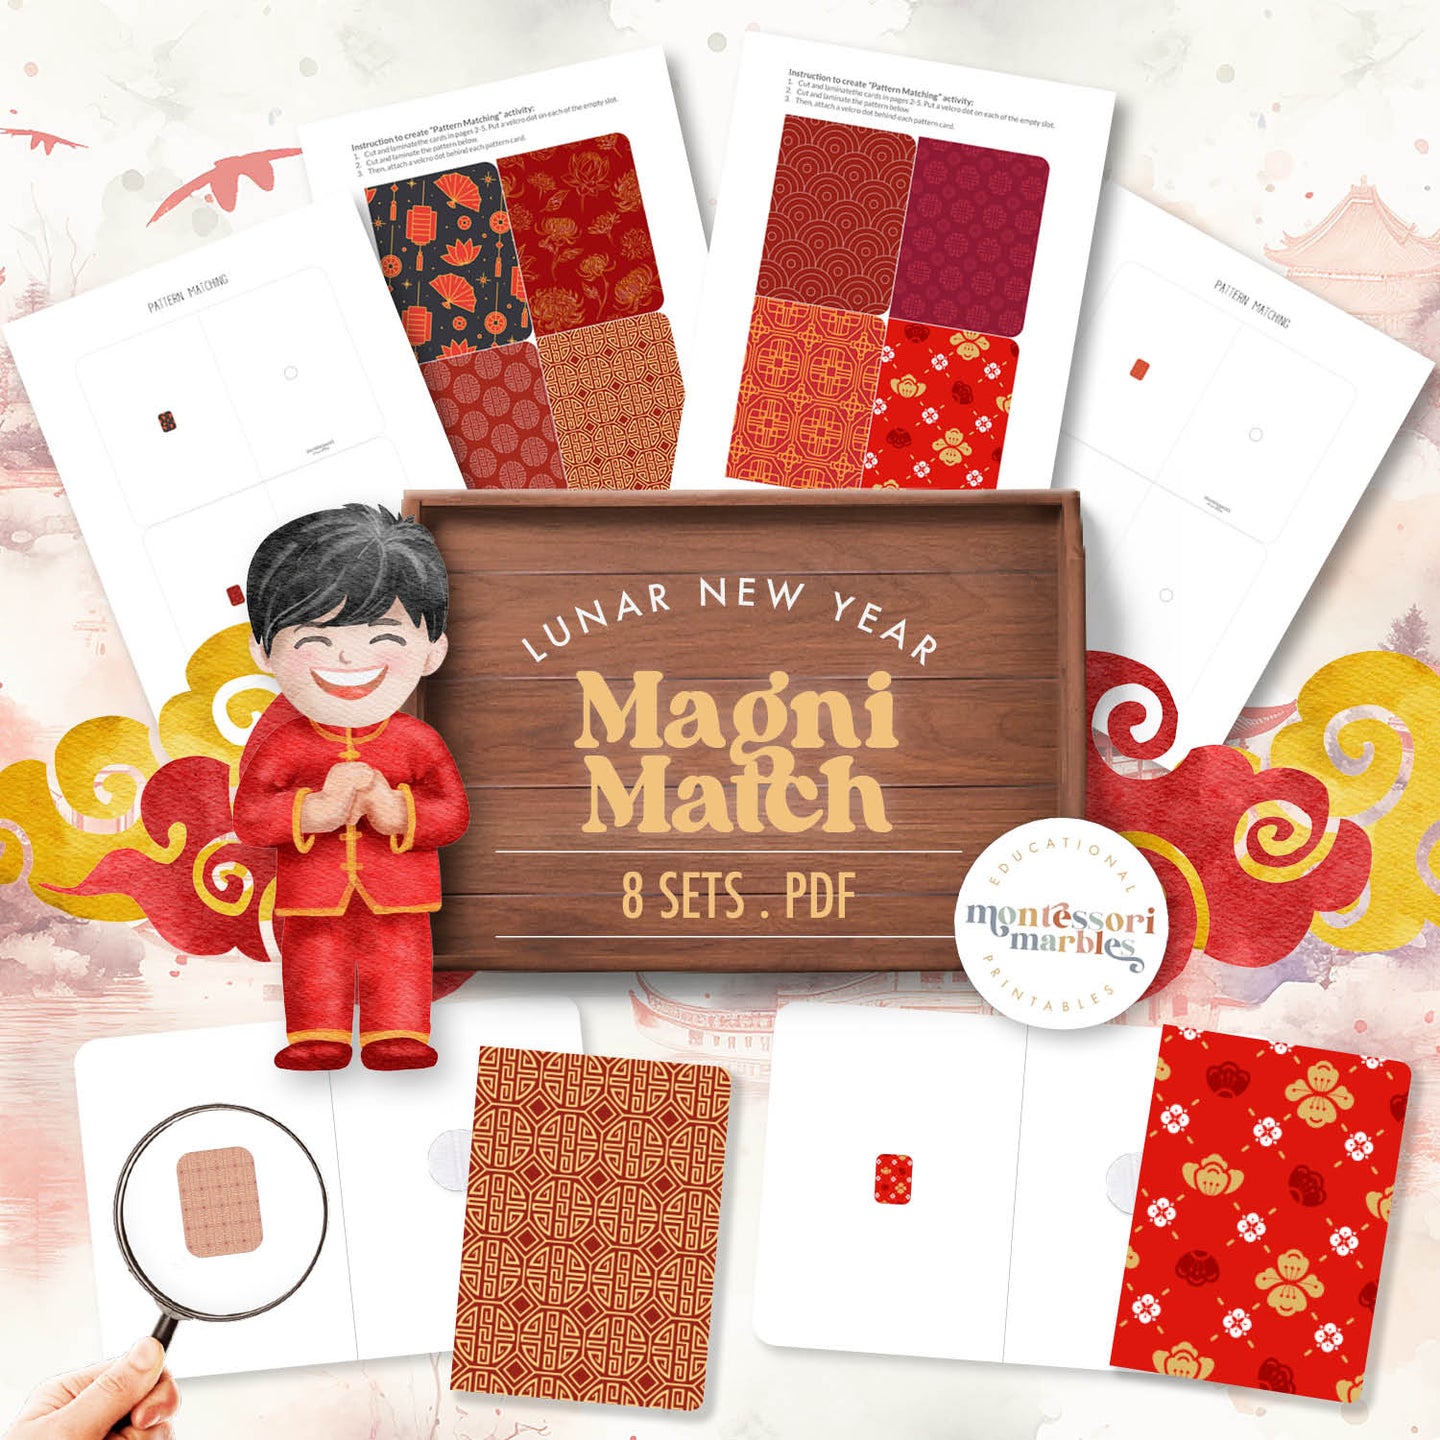 Lunar New Year Magni-Match